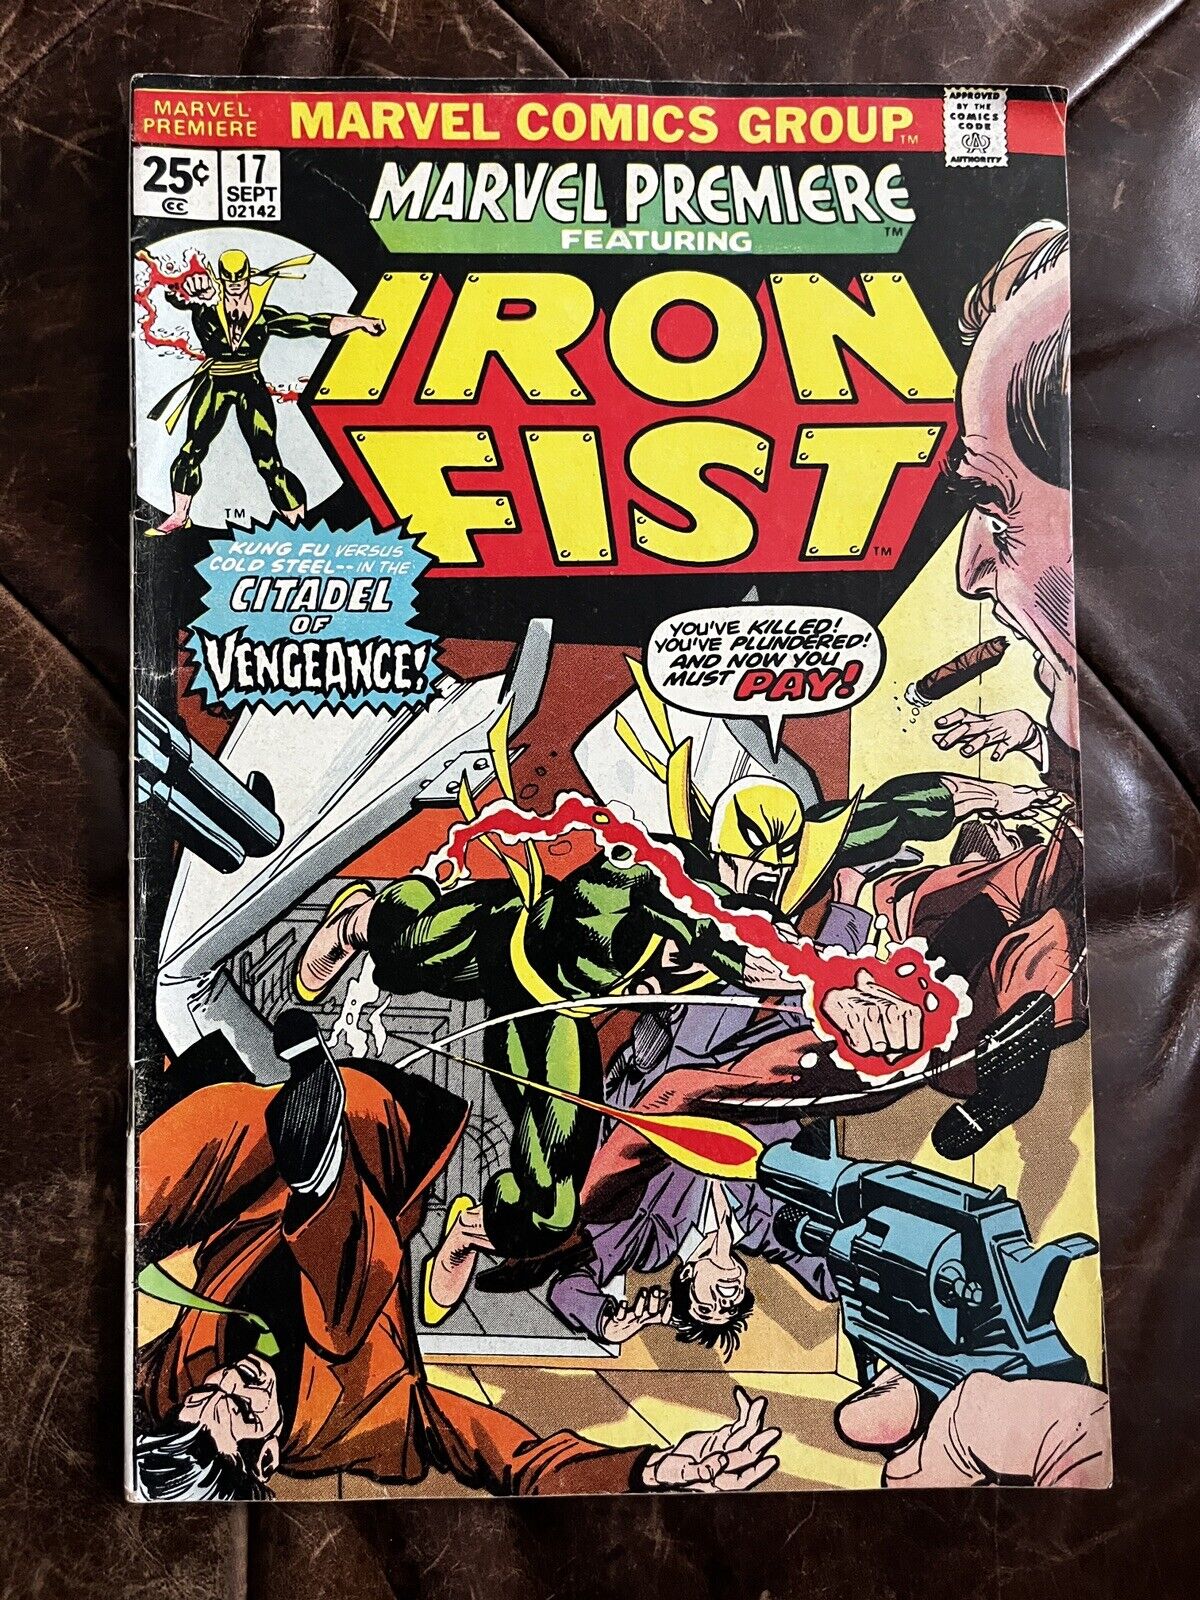 Marvel Premiere #17 (1974) Iron Fist